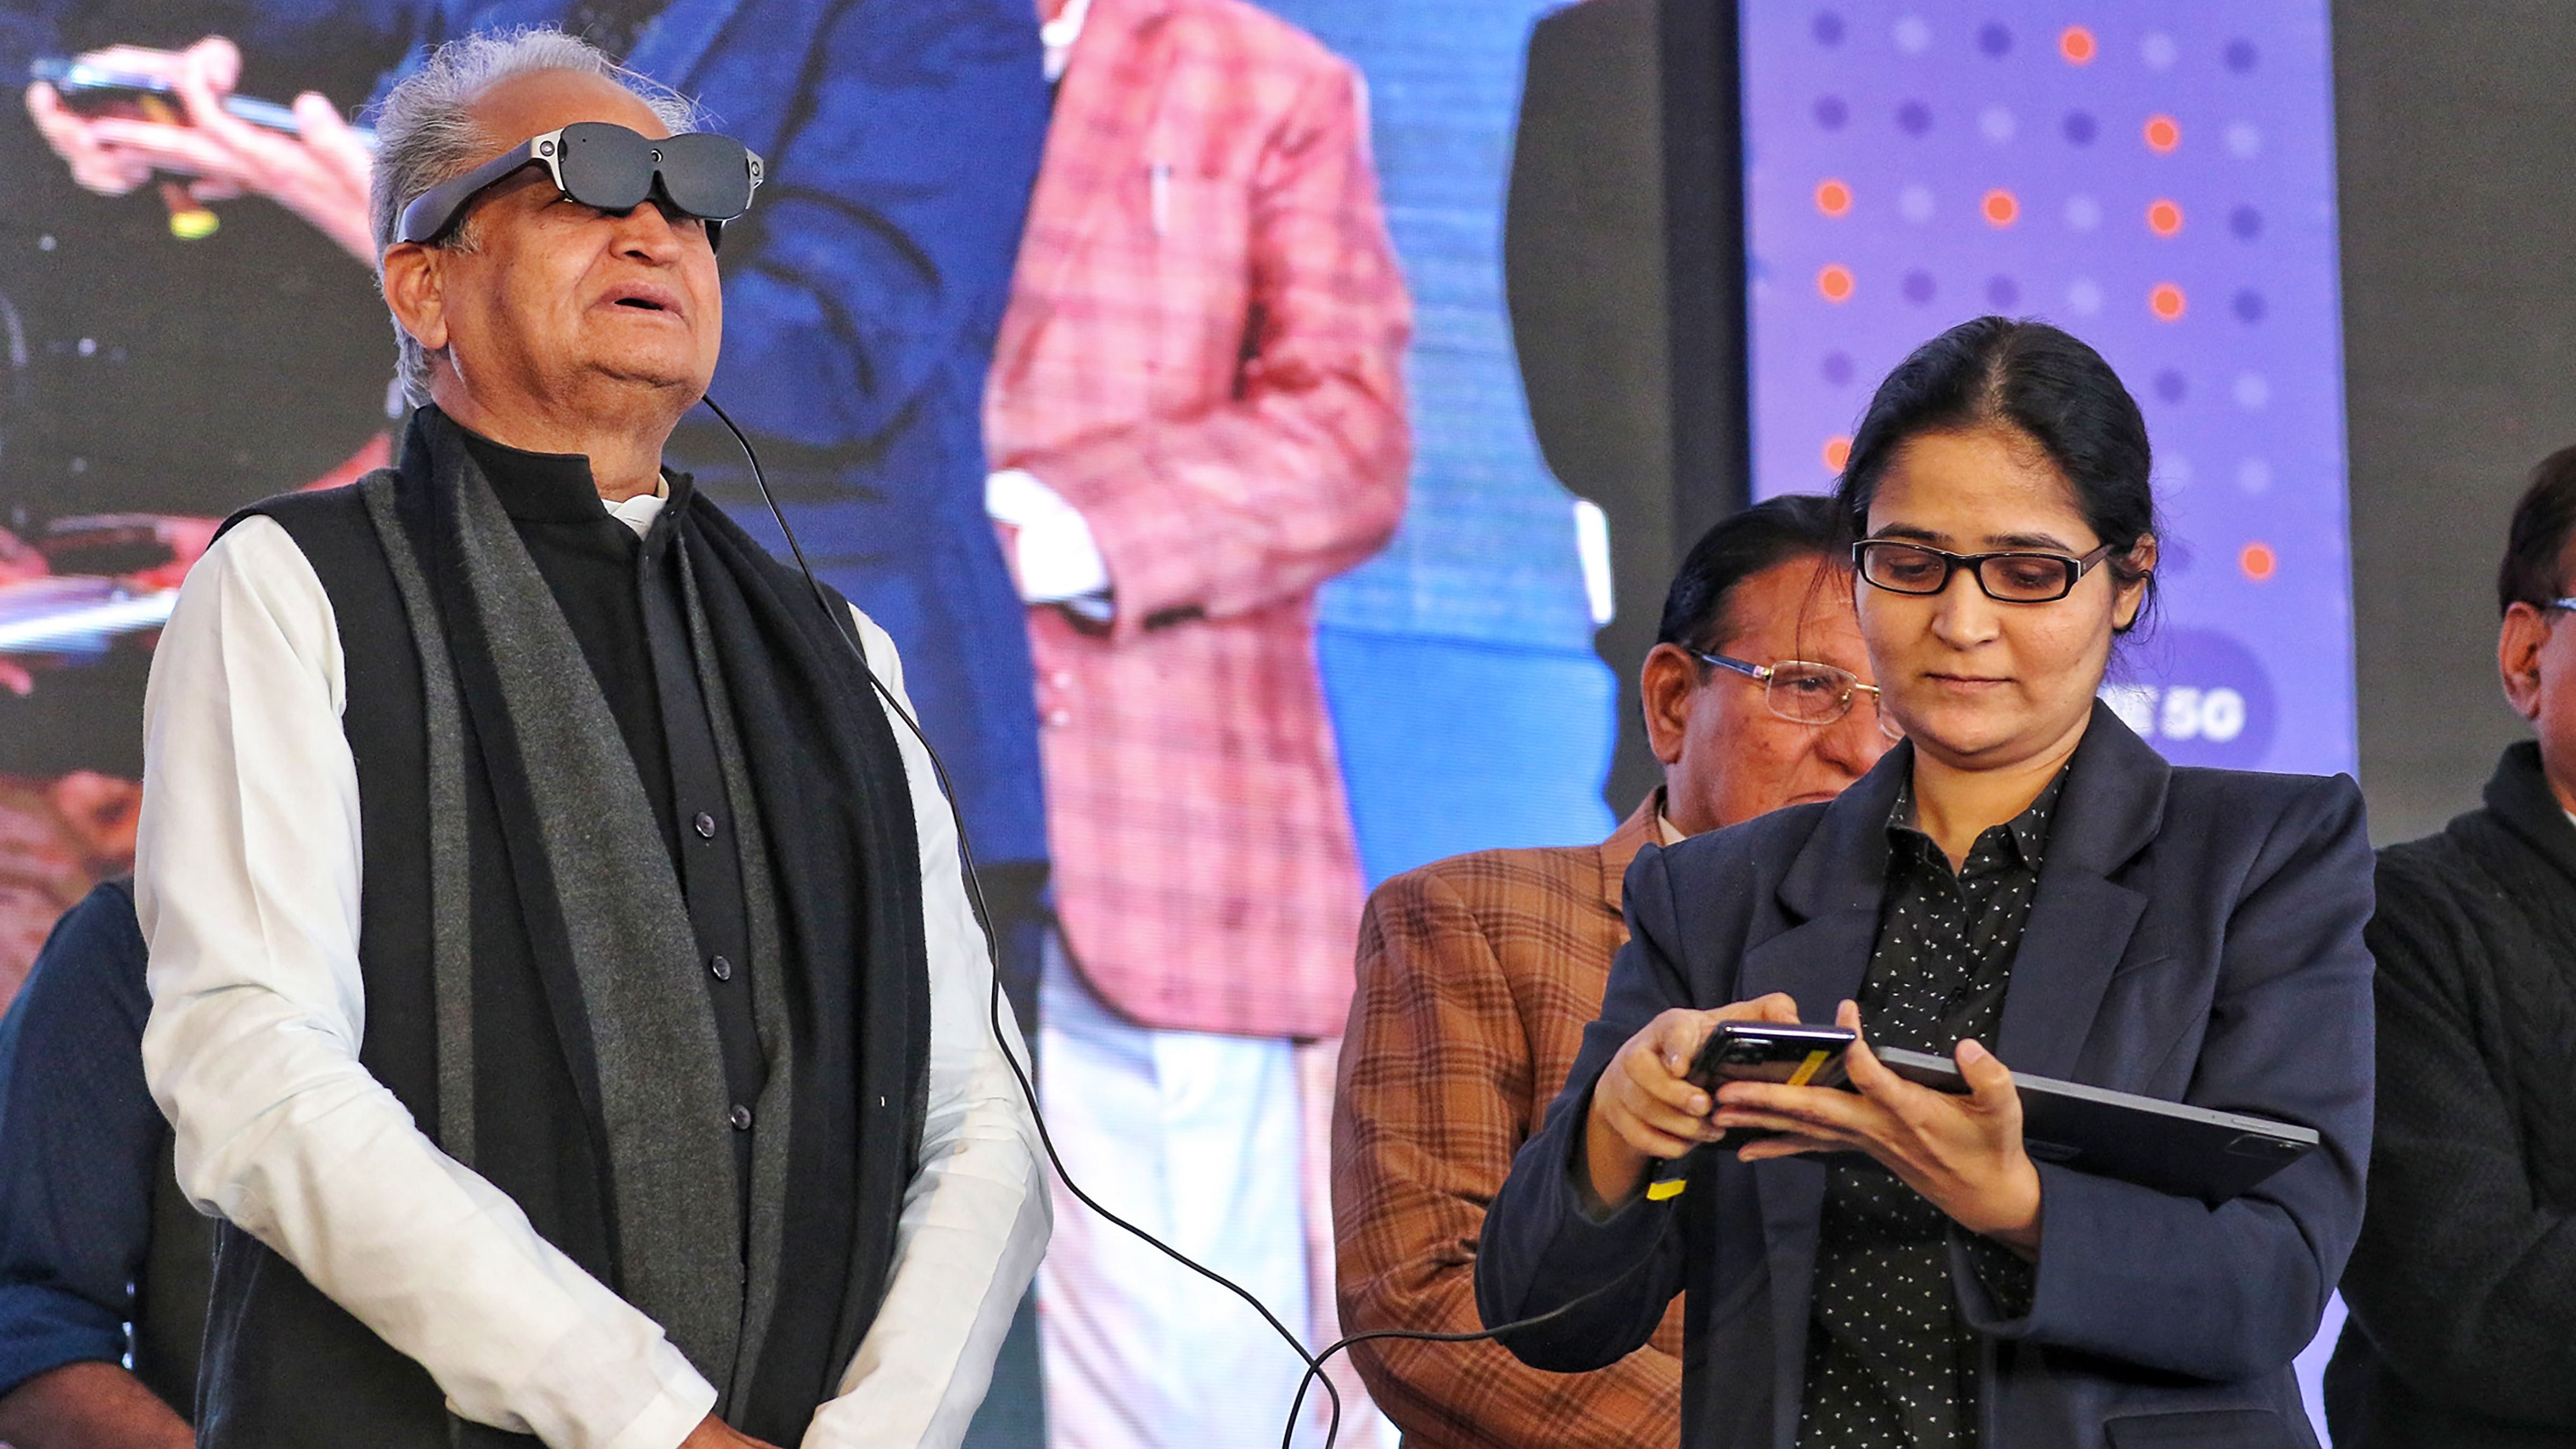 Rajasthan Chief Minister Ashok Gehlot launches Jio 5G service. Credit: PTI Photo